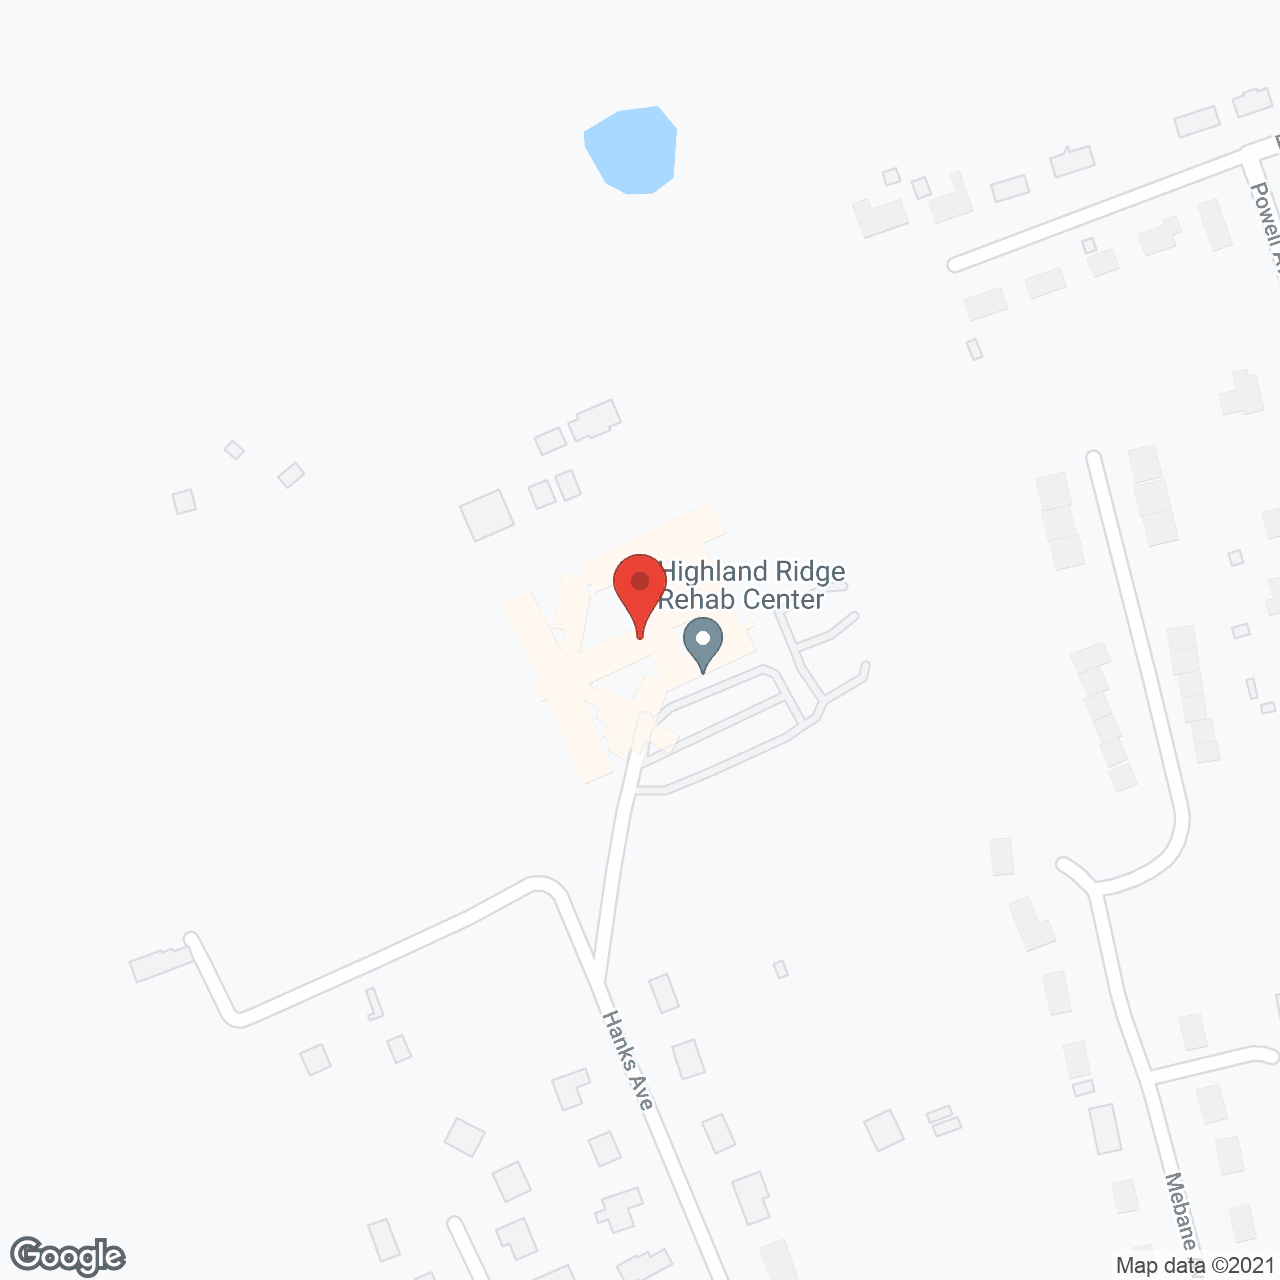 Highland Ridge Rehab Center in google map